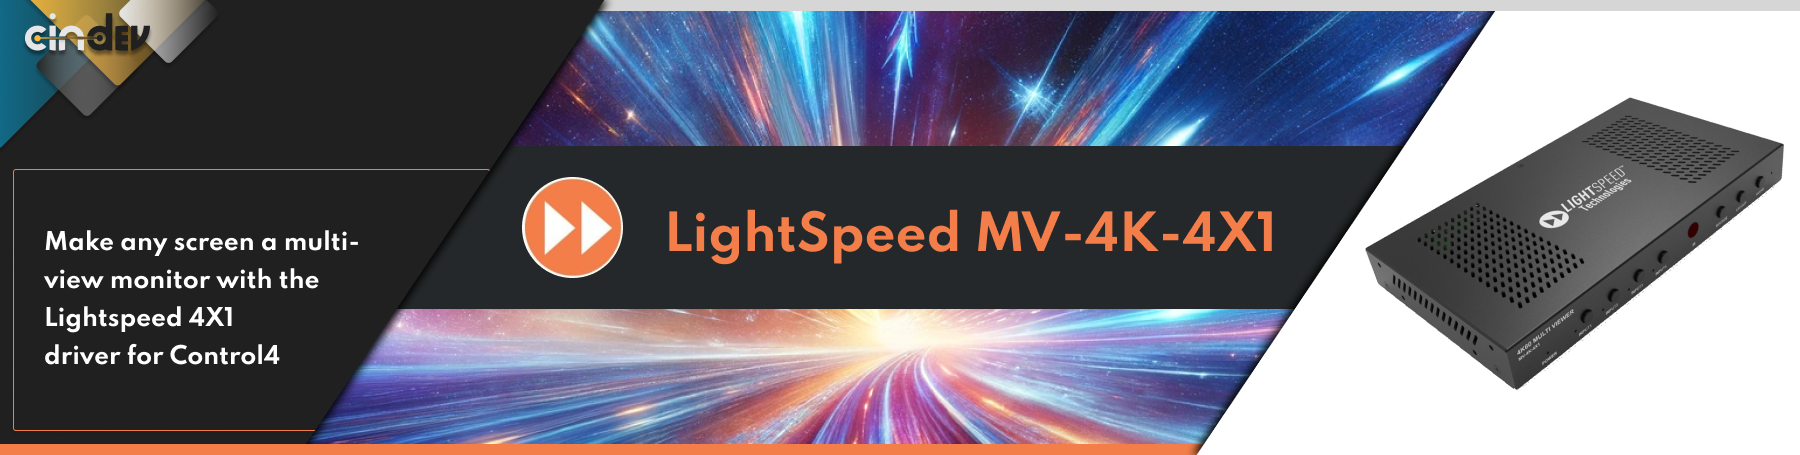 LightSpeed MV-4K-4X1